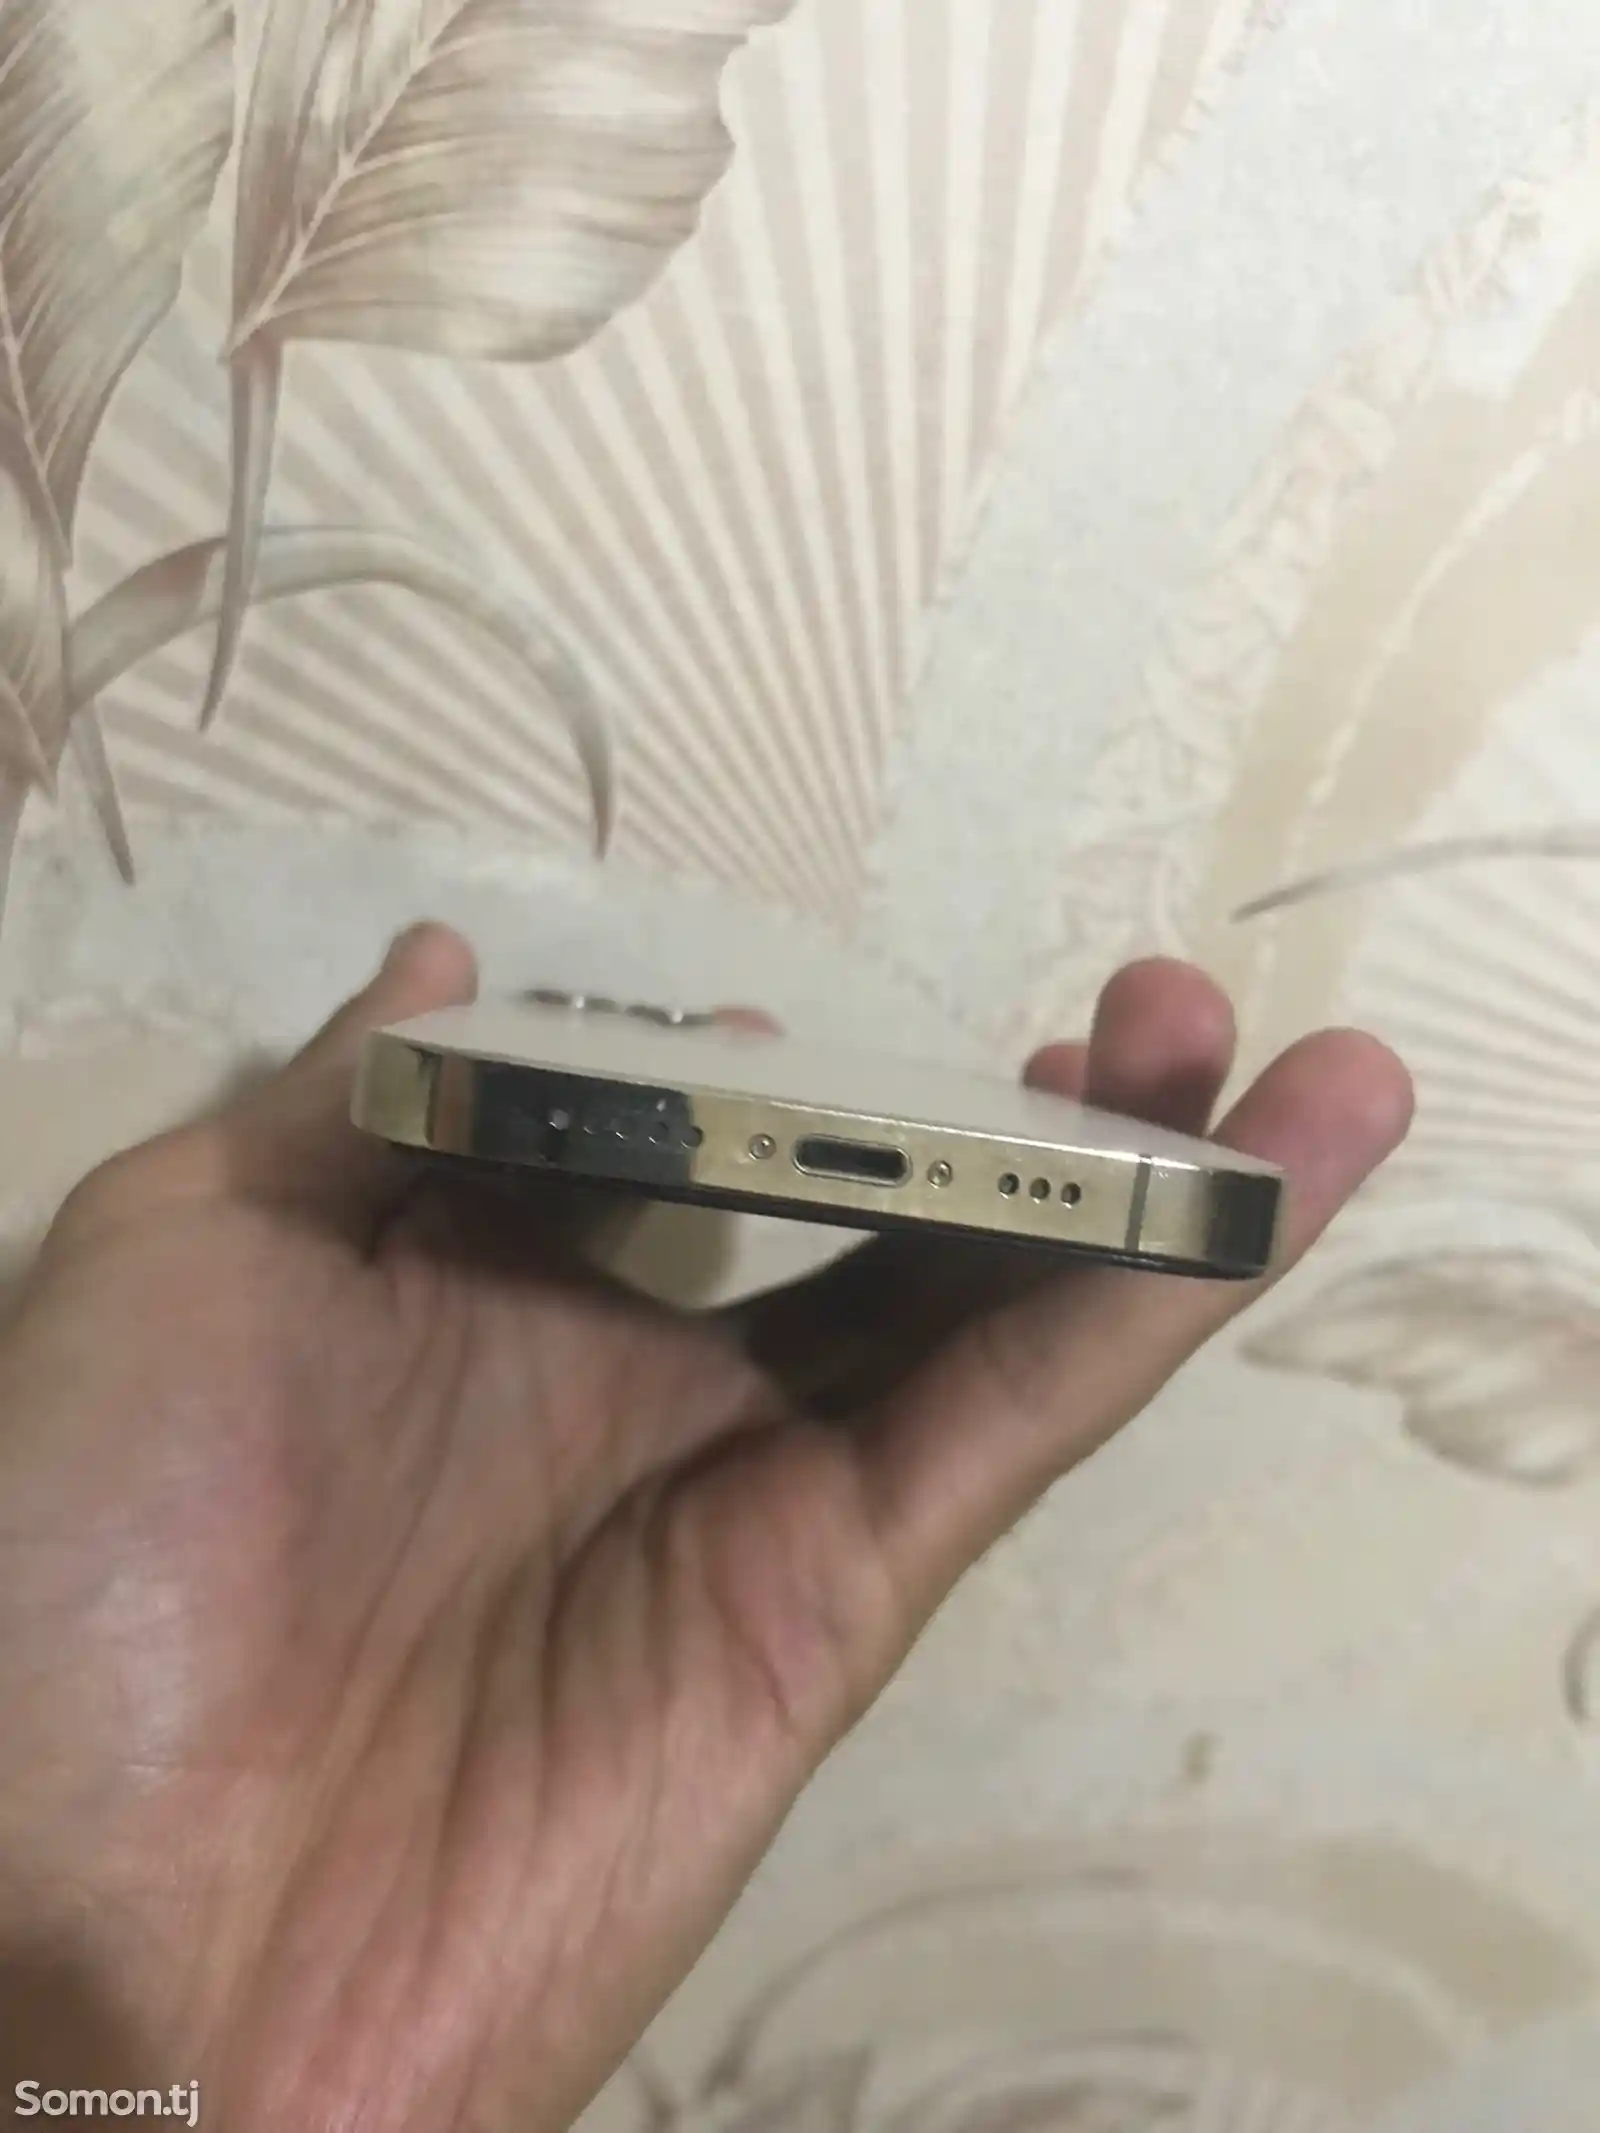 Apple iPhone 12 pro, 128 gb, Gold-2